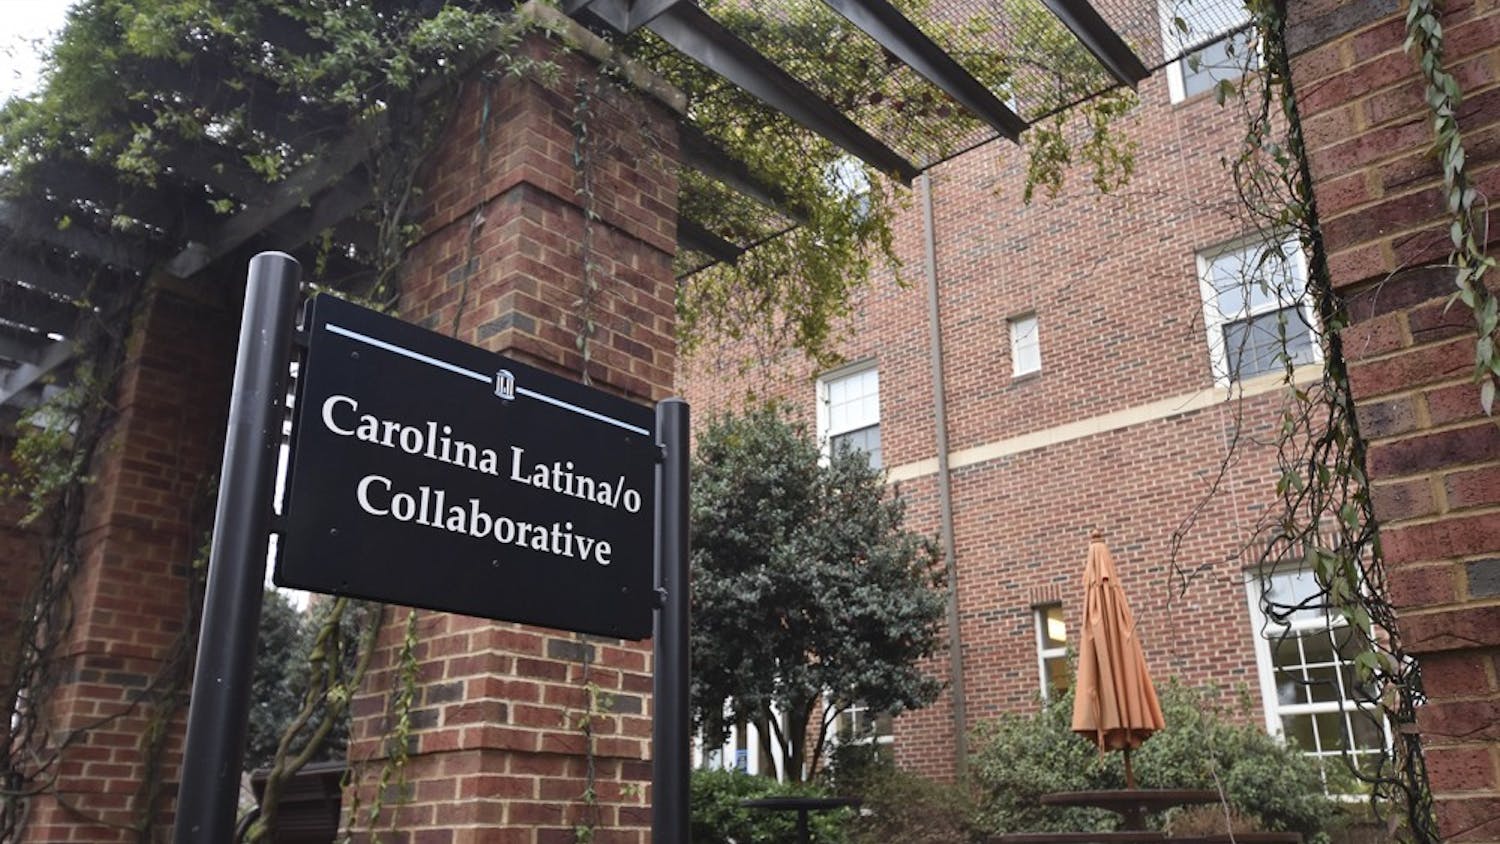 Craige North Residence Hall&nbsp;houses the Carolina Latina/Latino Collaborative.